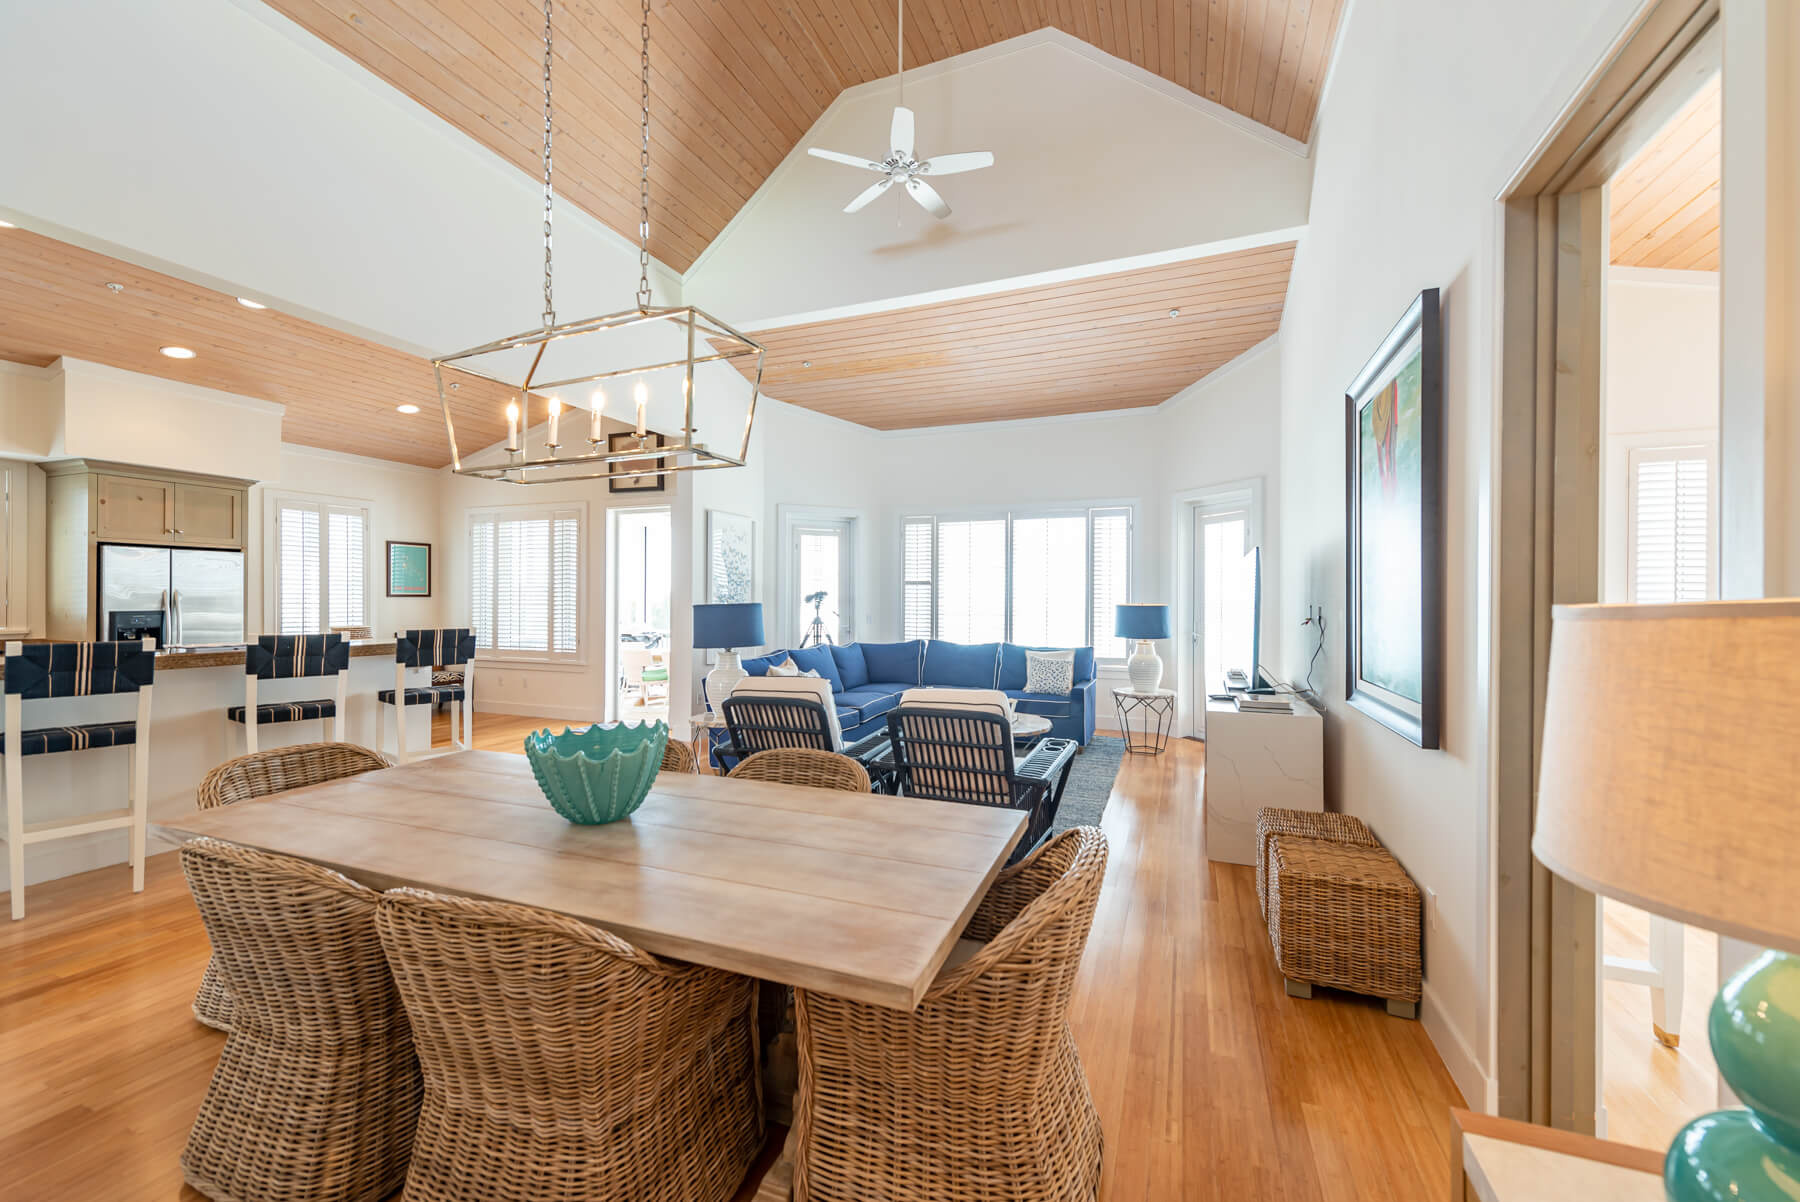 Yellowbird Abaco Club beachfront villa living room and dining room area.